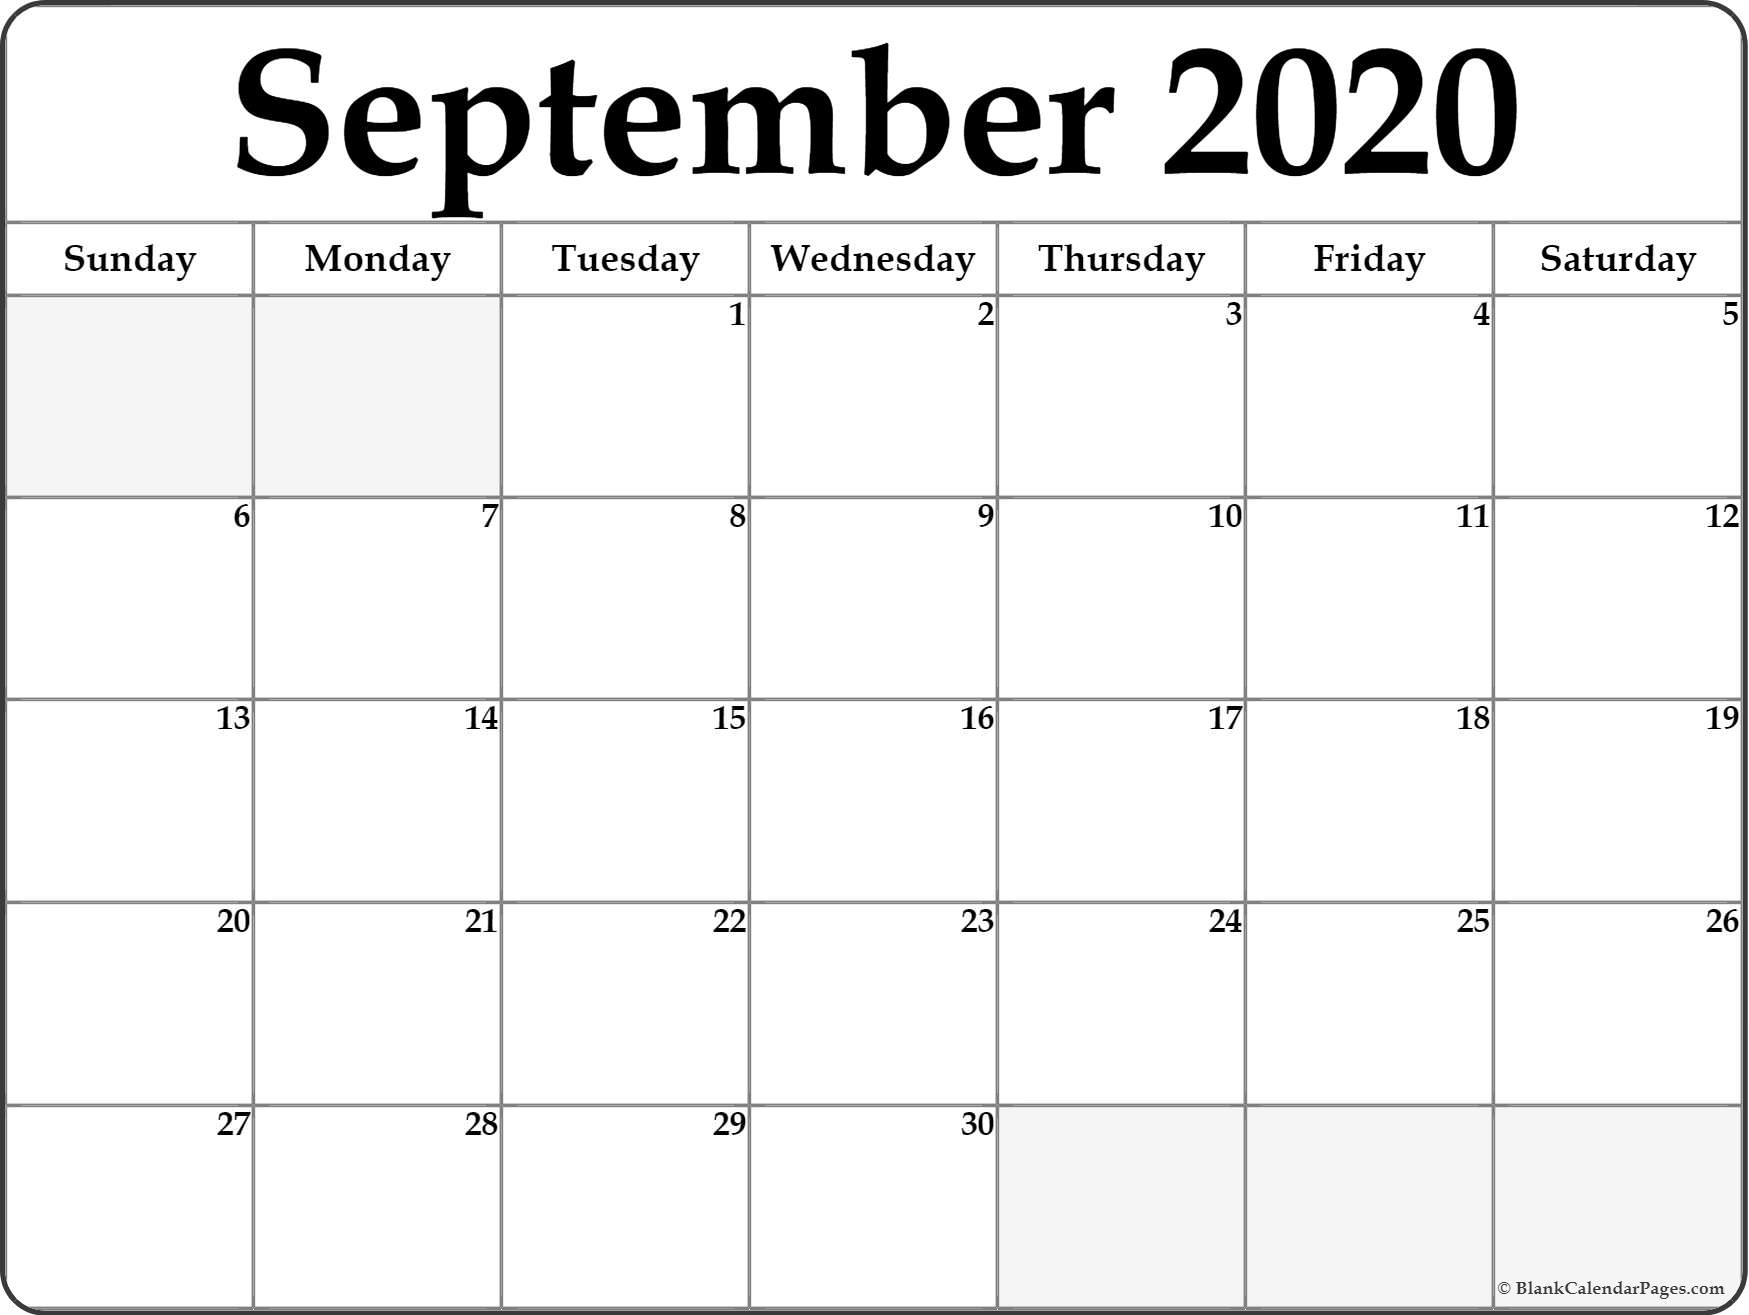 September 2020 Calendar | Free Printable Monthly Calendars September 2020 Calendar Canada